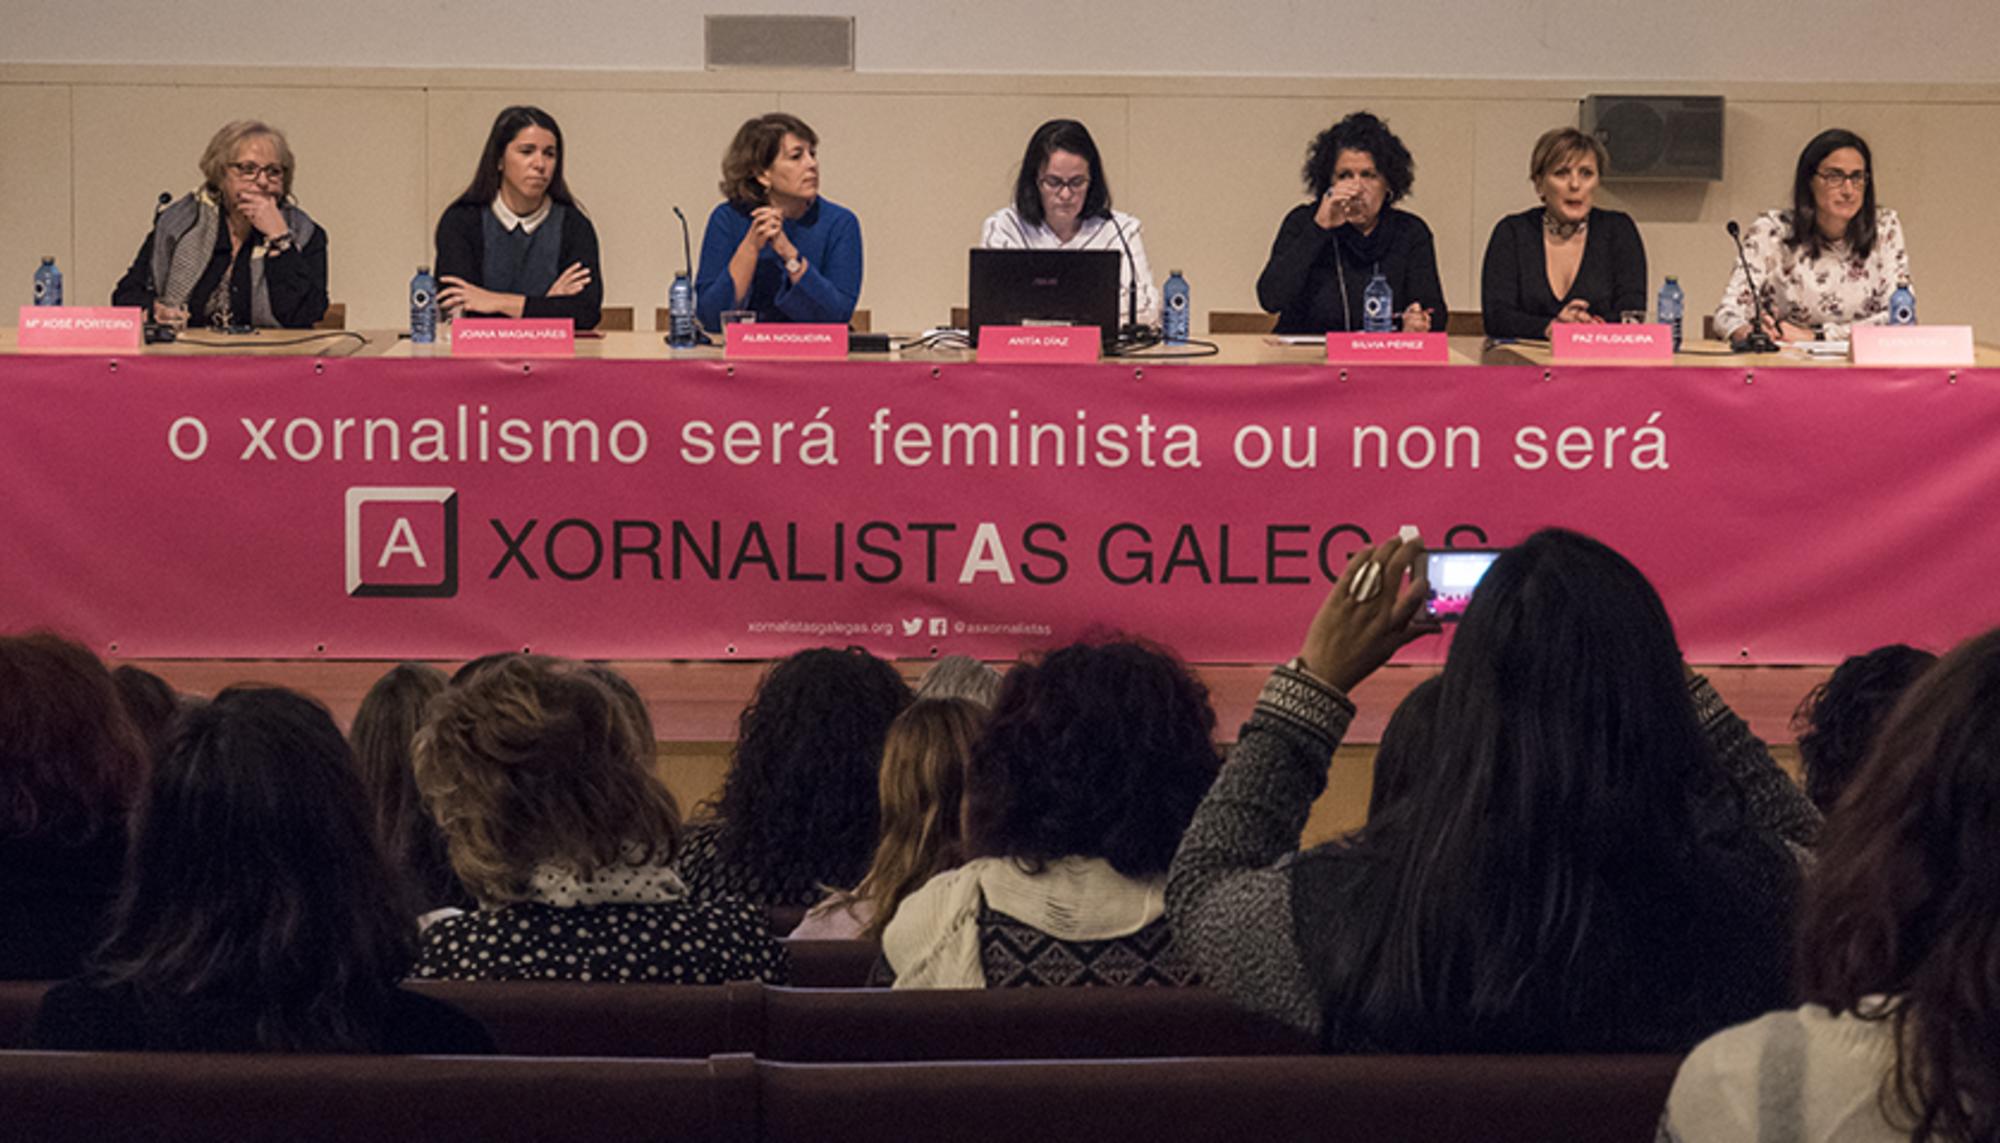 xornalistas galegas feminismo